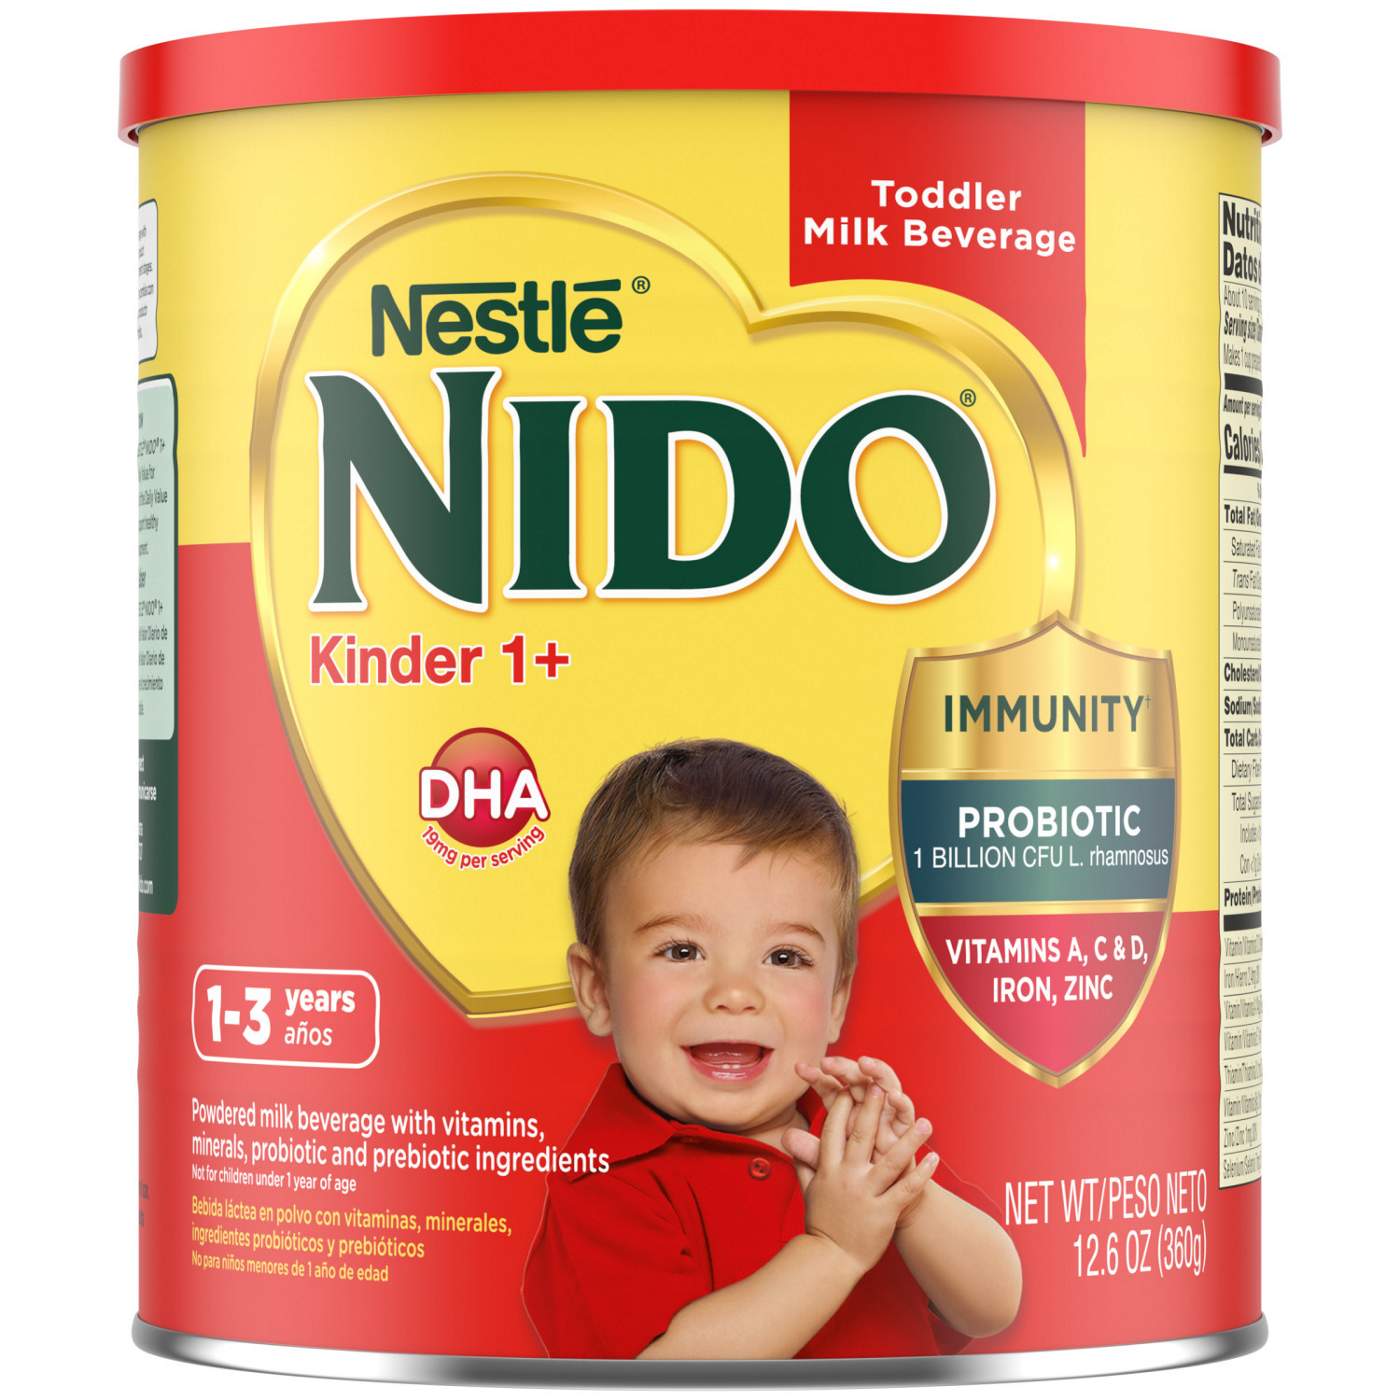 Nido NIDO Kinder 1+ Toddler Milk Beverage - Shop Milk at H-E-B